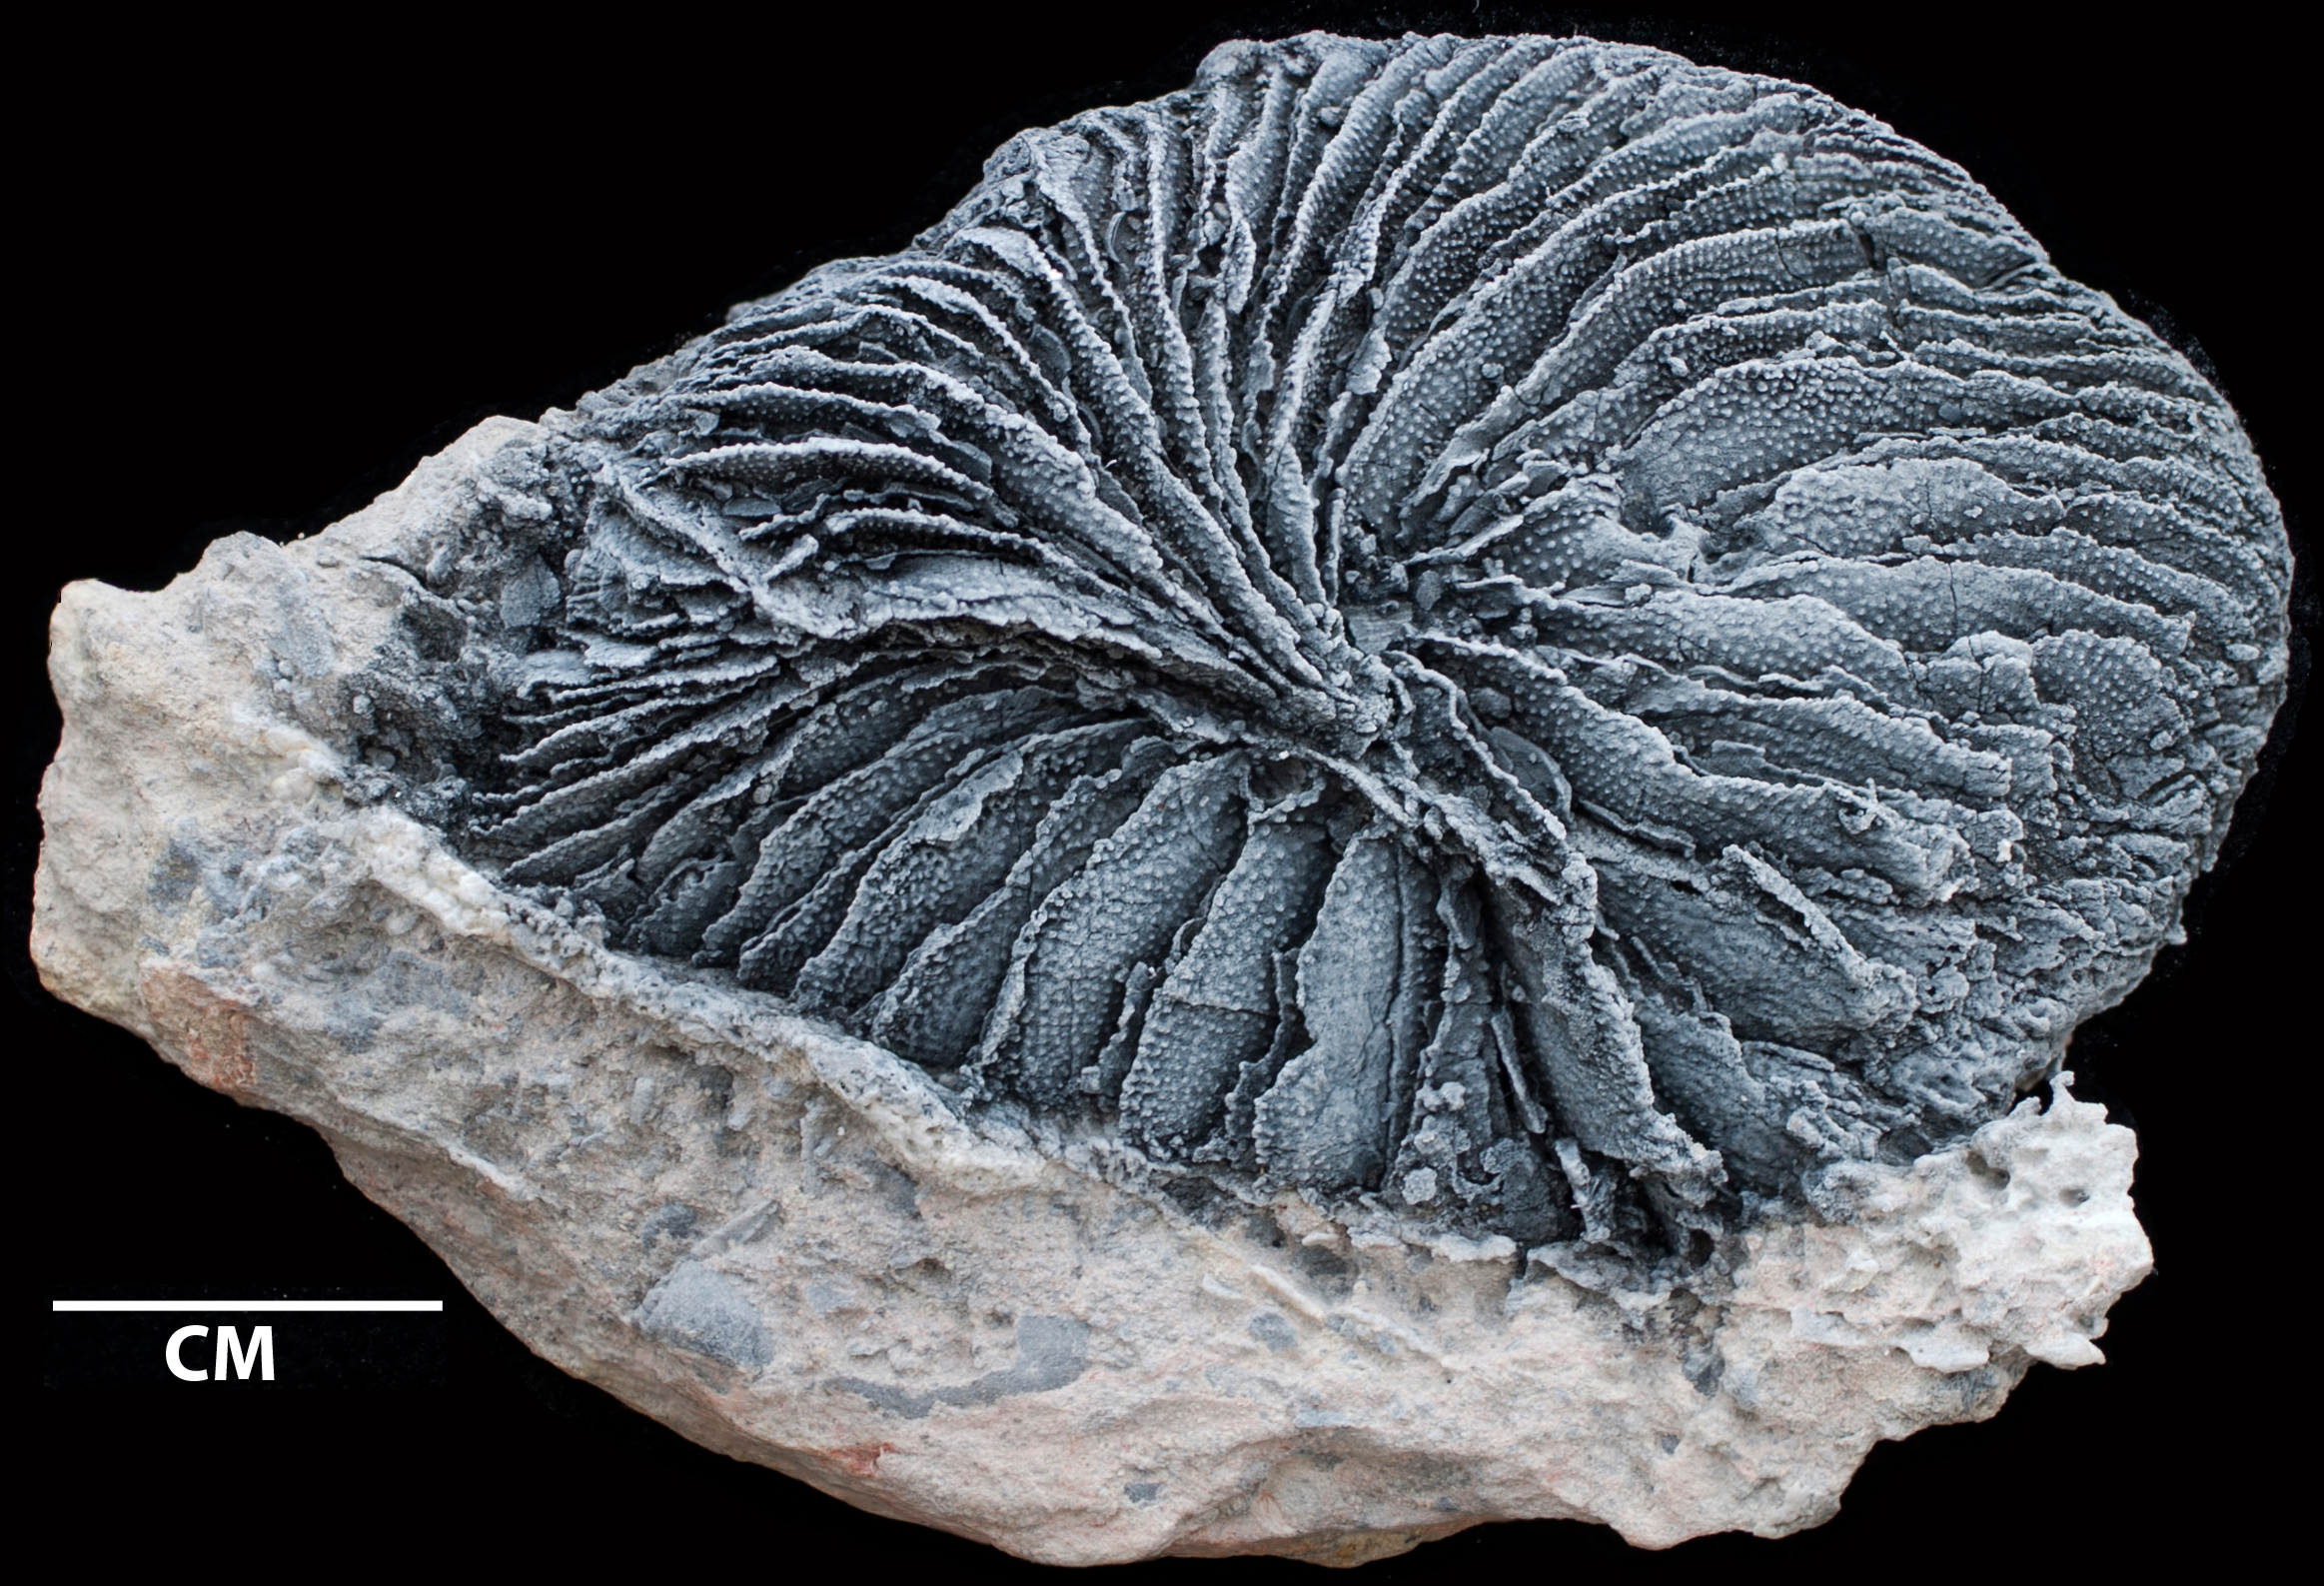 Specimen: Distichophyllia norica, UMPC 14371, a 228-208 million year old coral from Nez Perce County, Idaho.